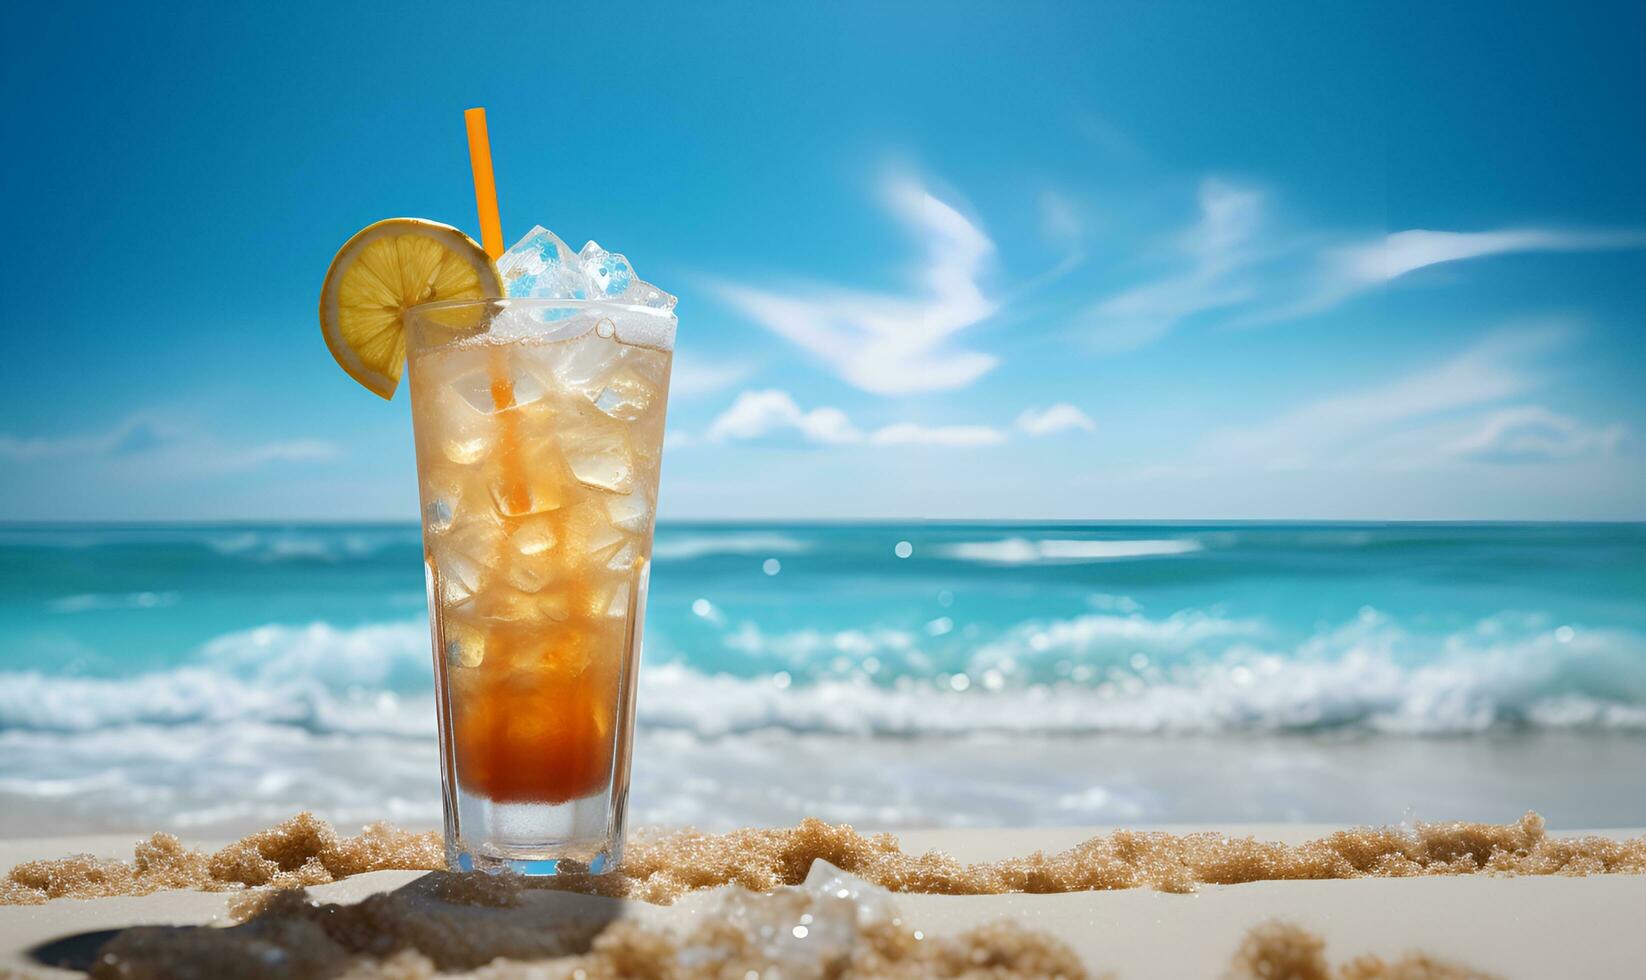 cold lemon drink close up on the beach, ai generative photo